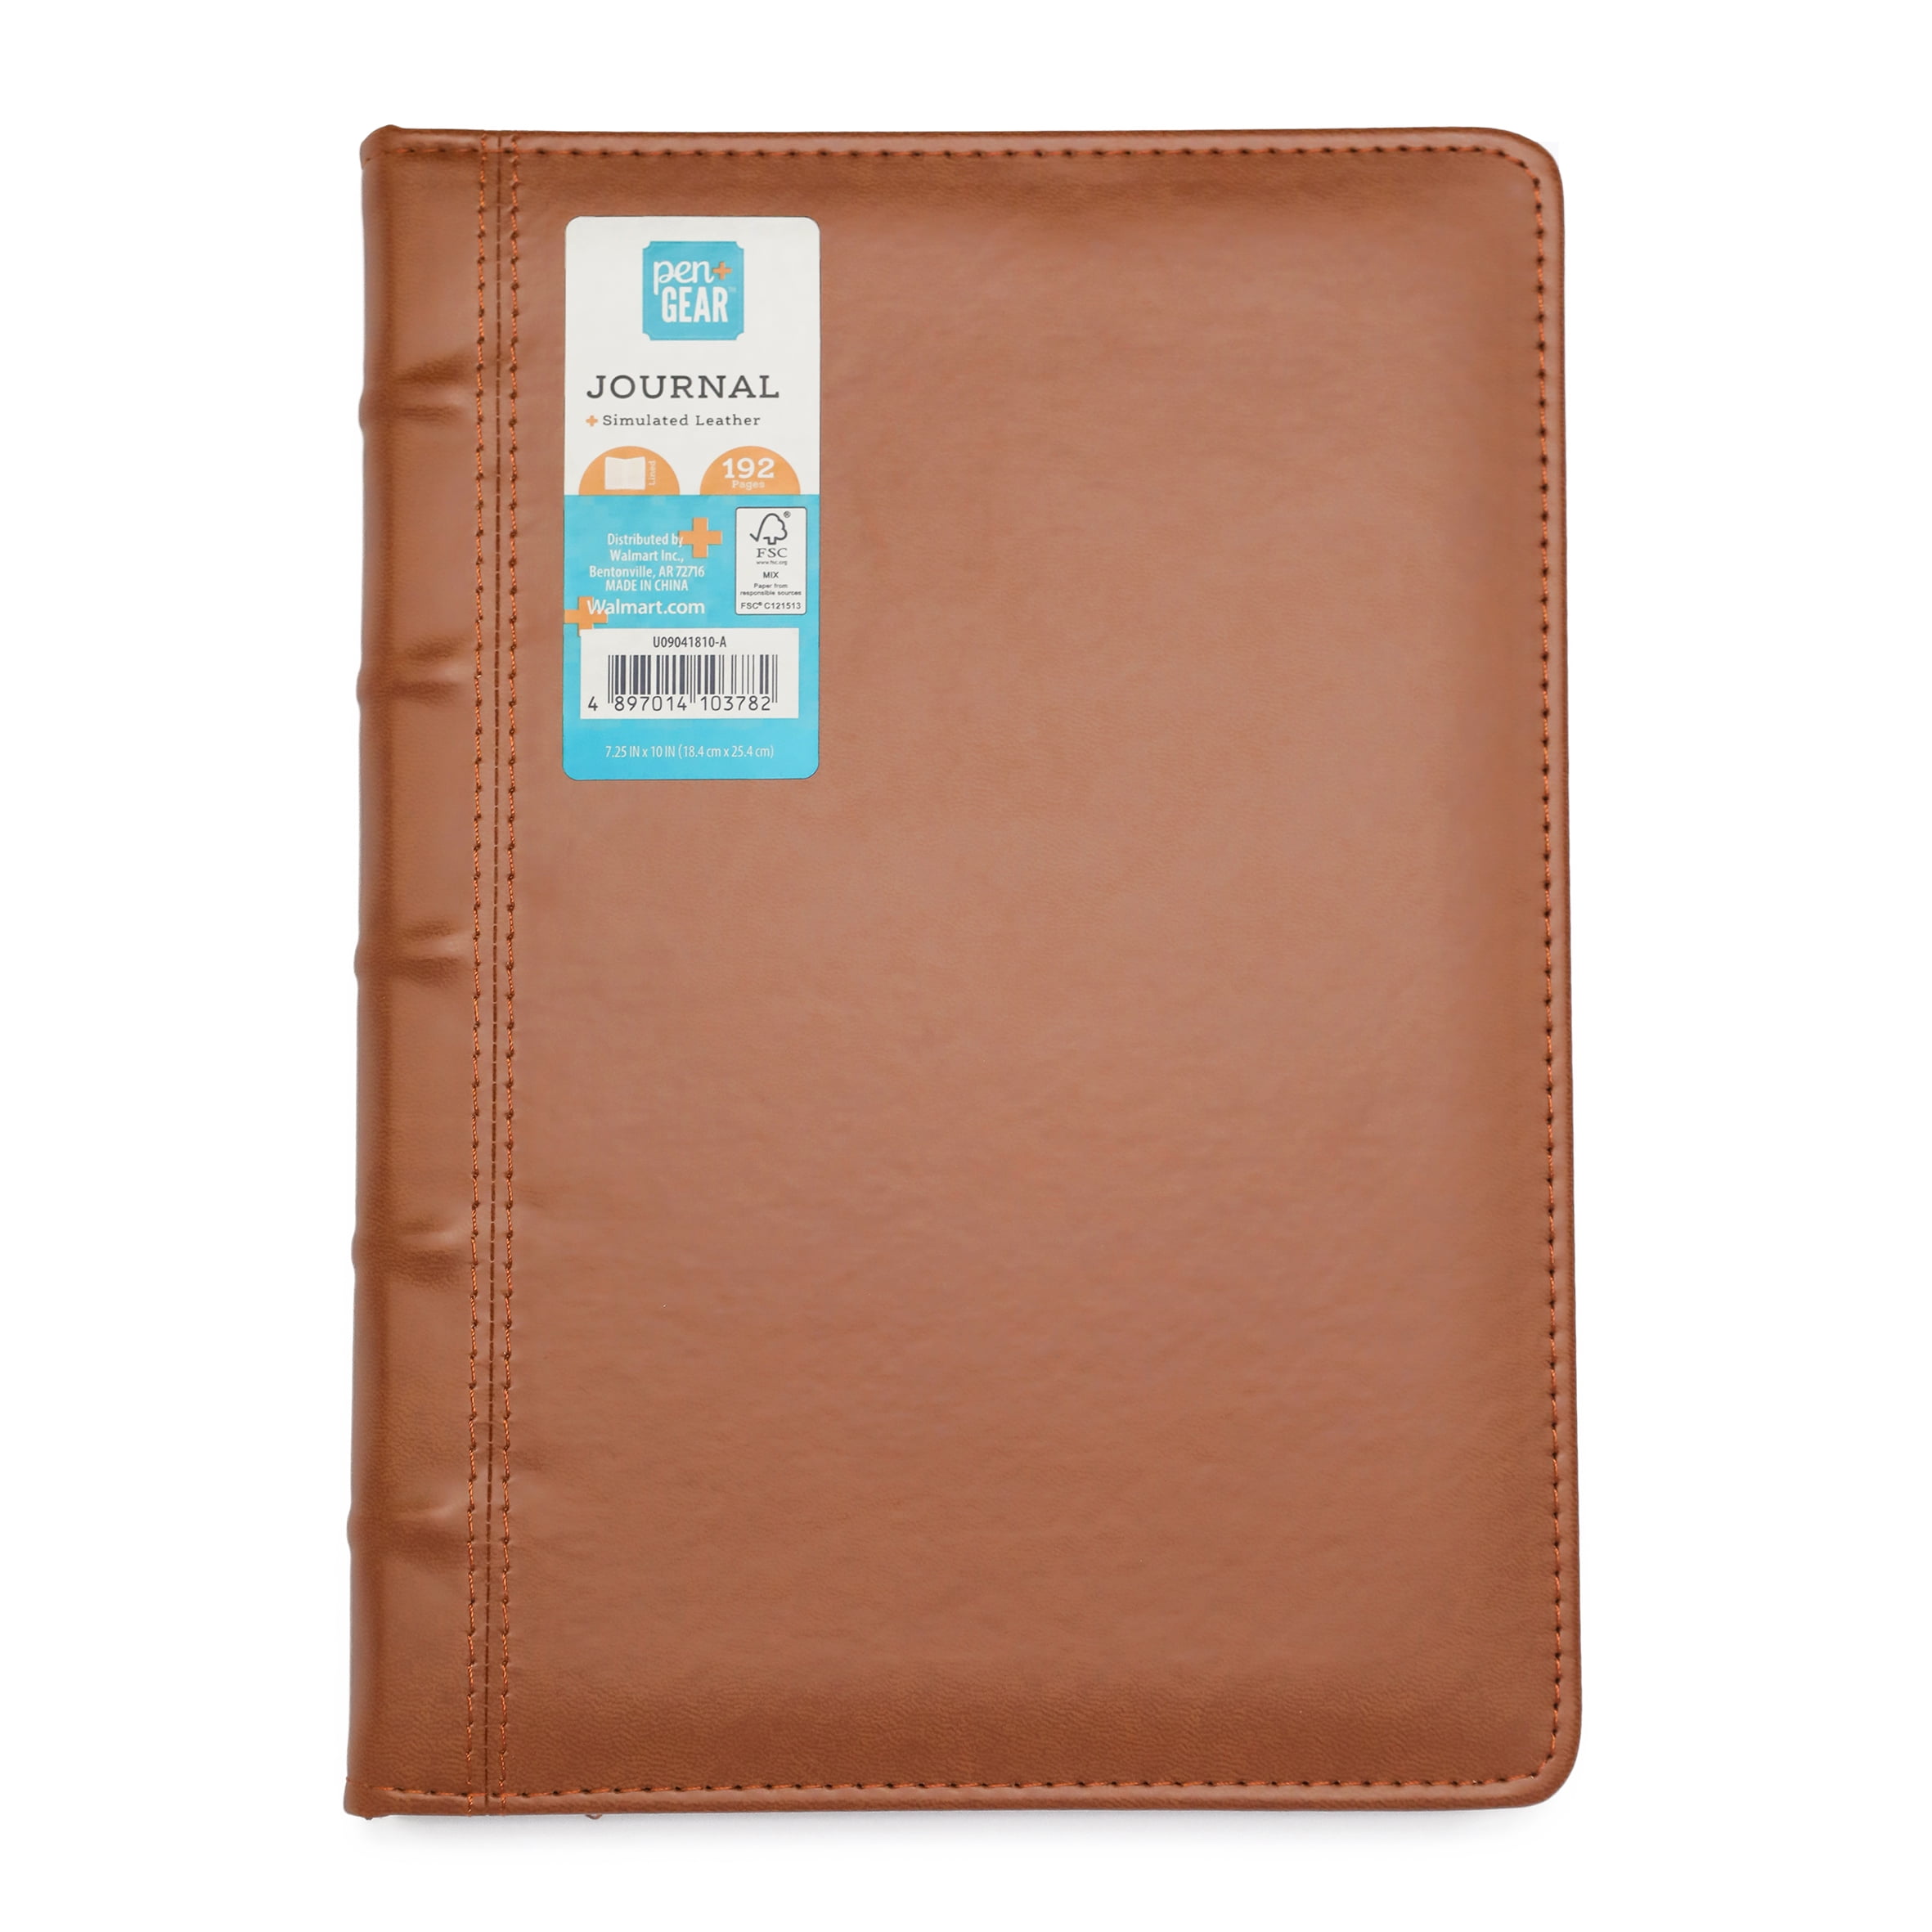 Leaves Drop Light Glare Leather Passport Holder Cover Case Travel One Pocket